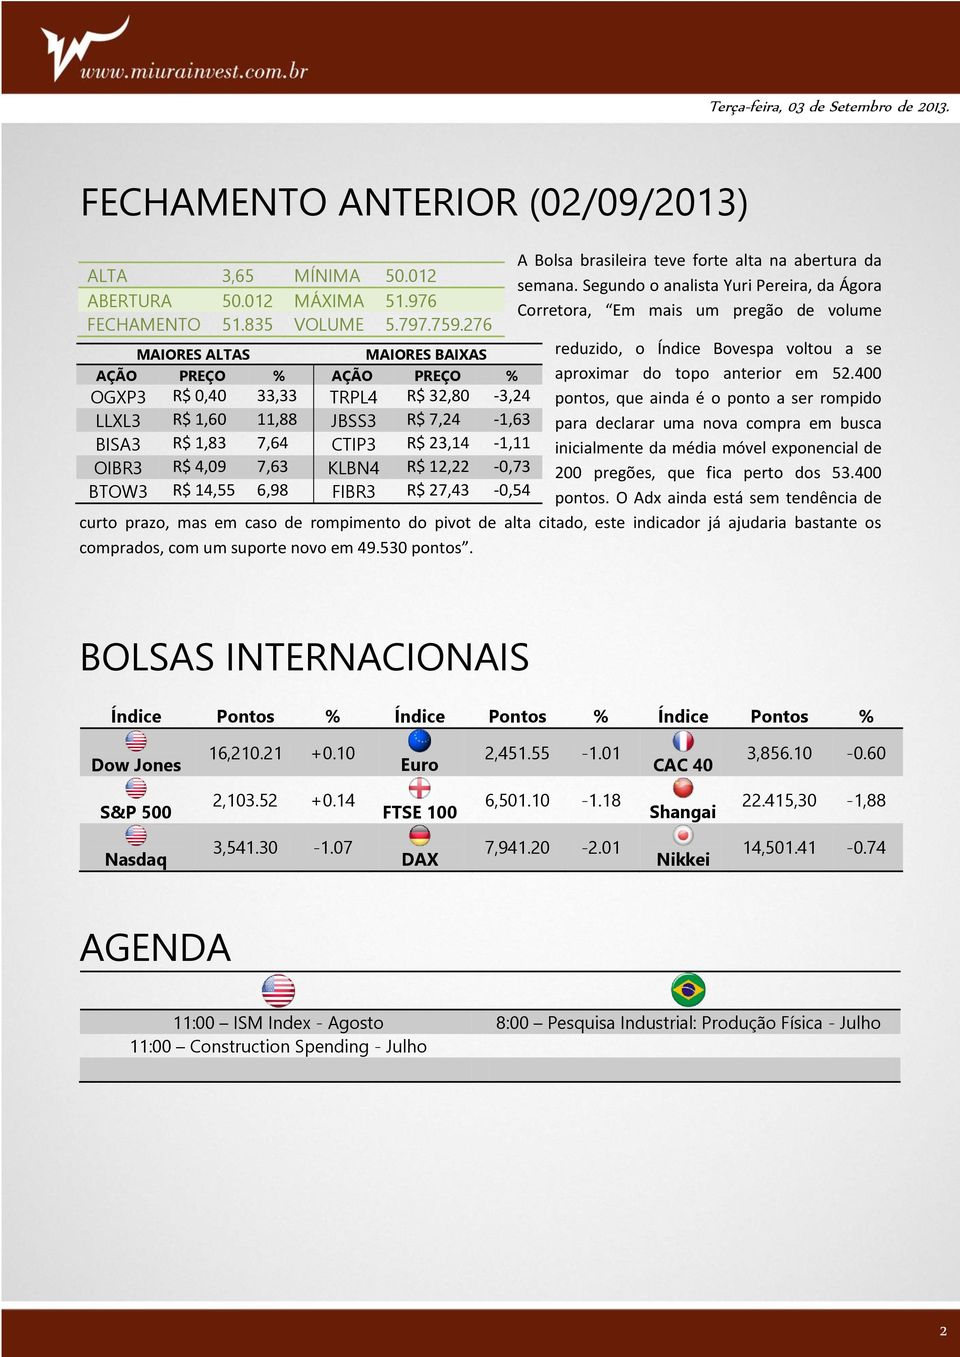 KLBN4 R$ 12,22-0,73 BTOW3 R$ 14,55 6,98 FIBR3 R$ 27,43-0,54 A Bolsa brasileira teve forte alta na abertura da semana.